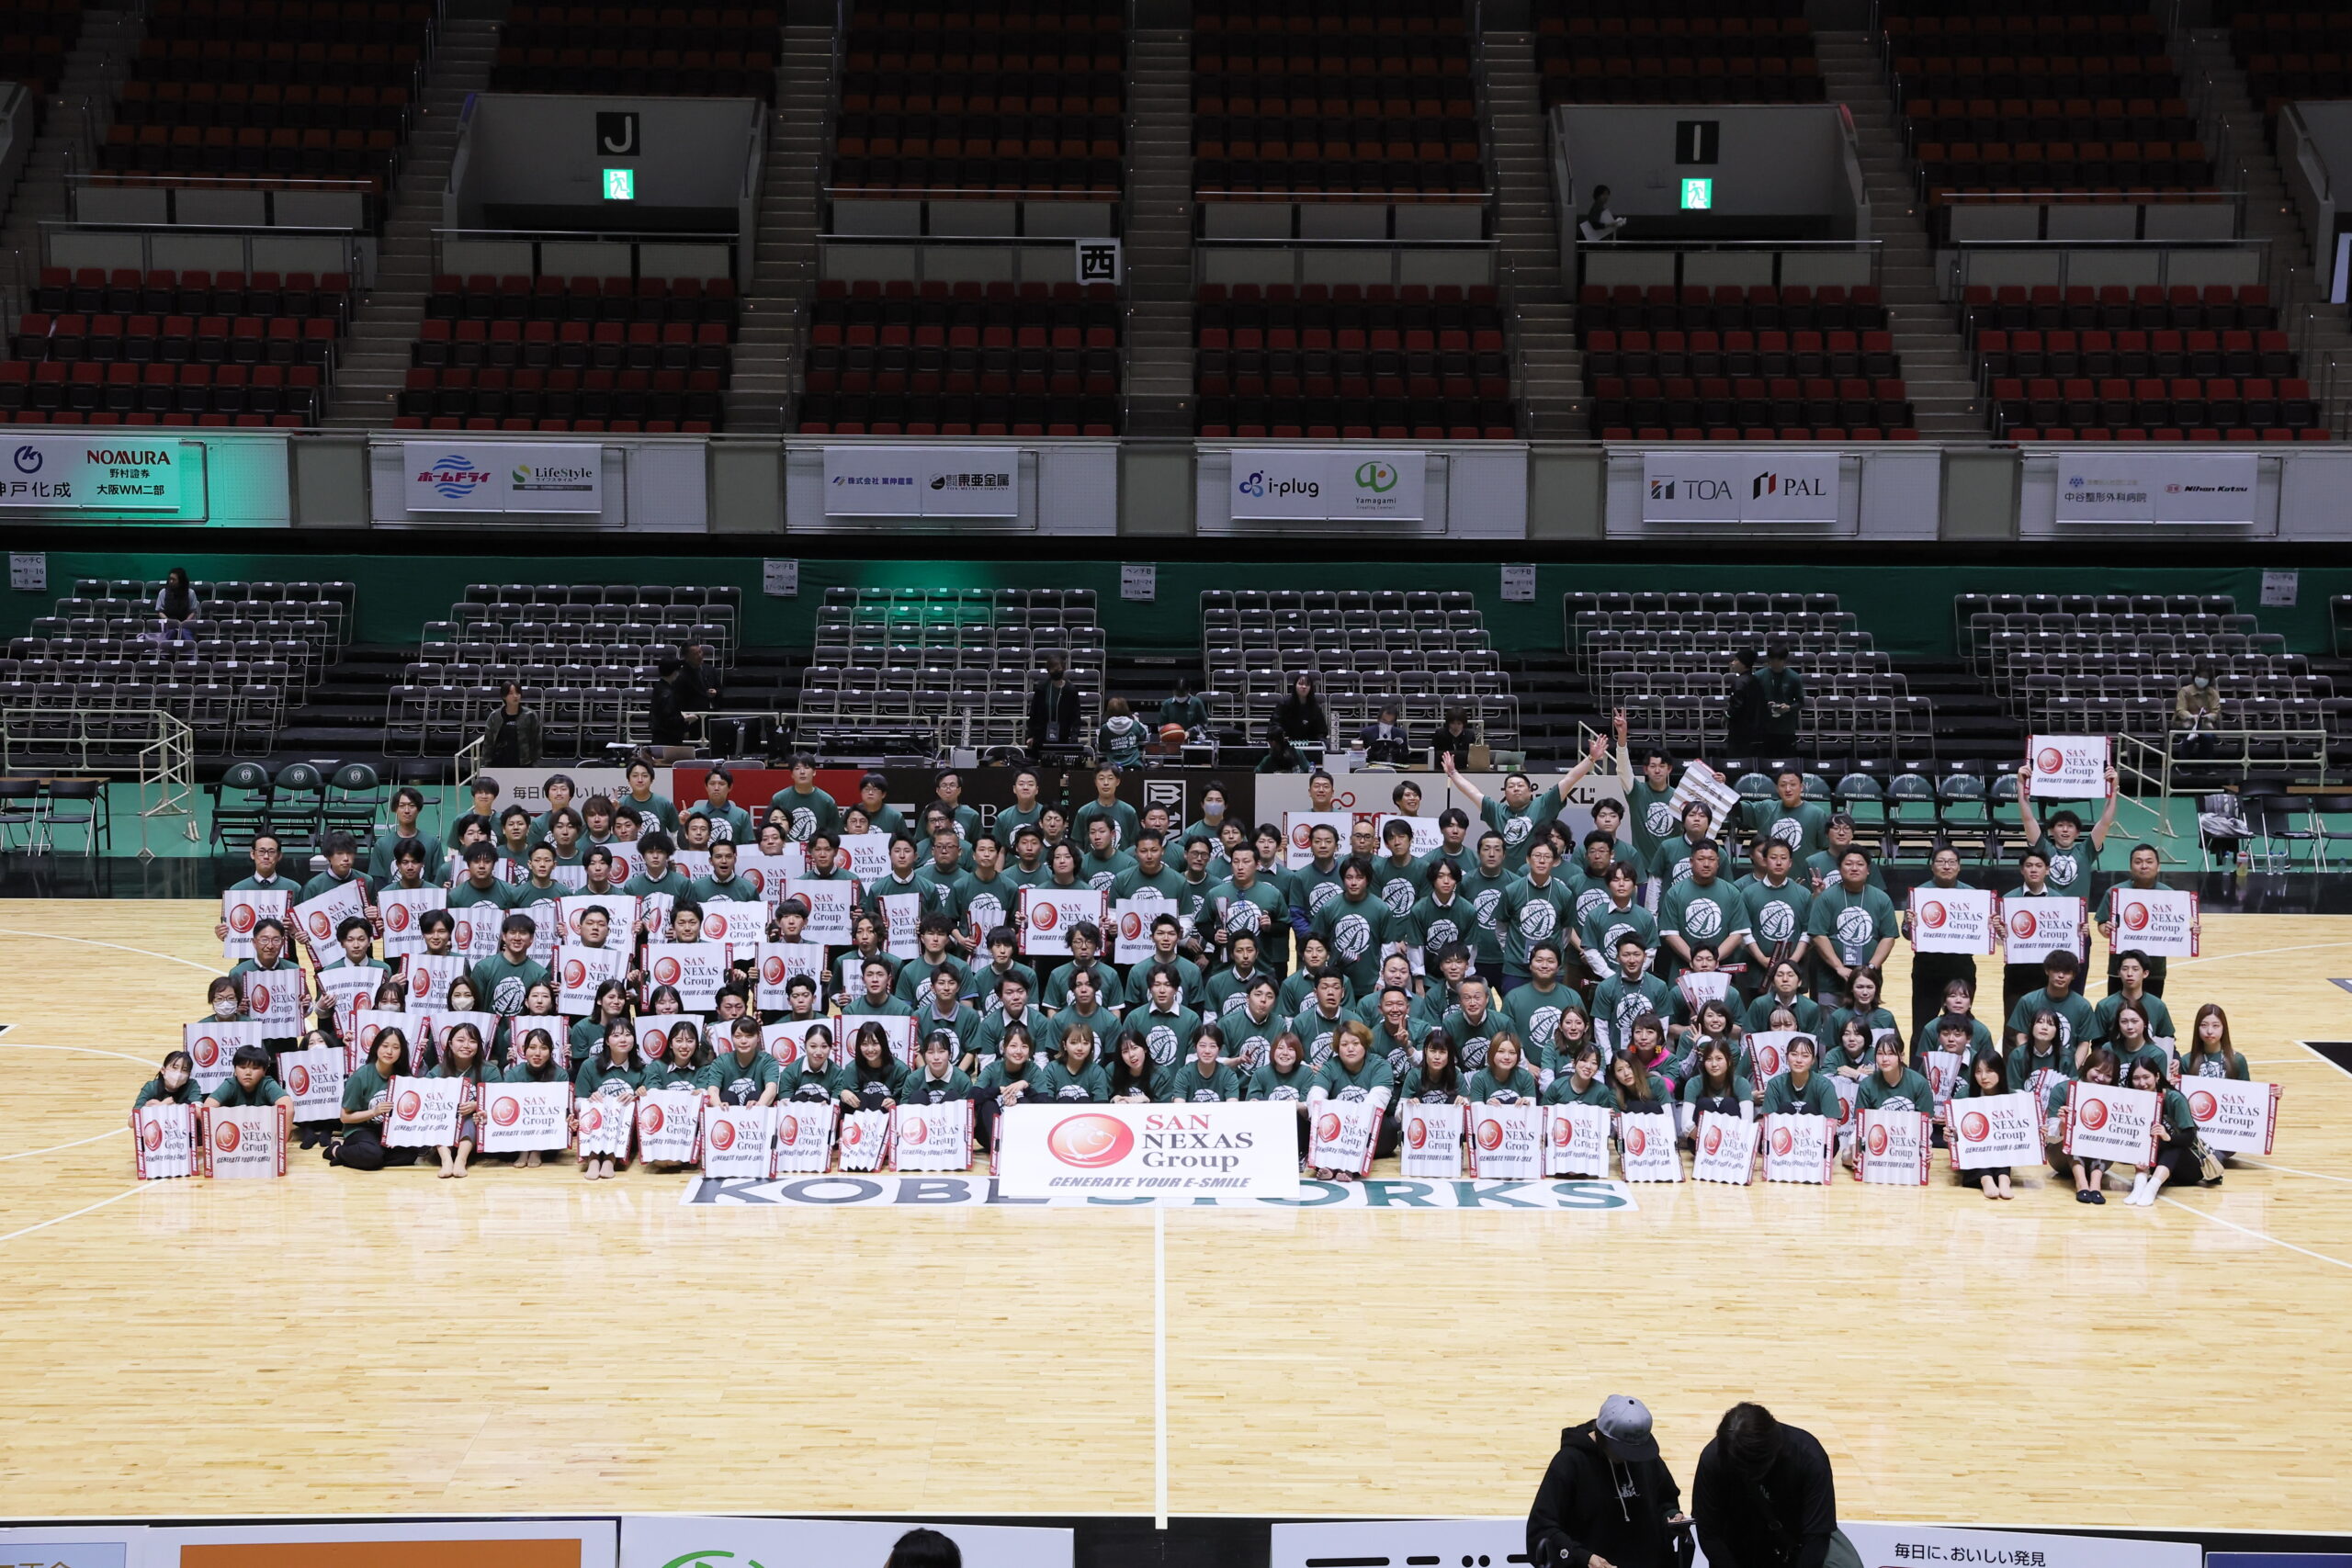 －SAN NEXAS Group presents－神戸ストークス冠試合が開催されました！